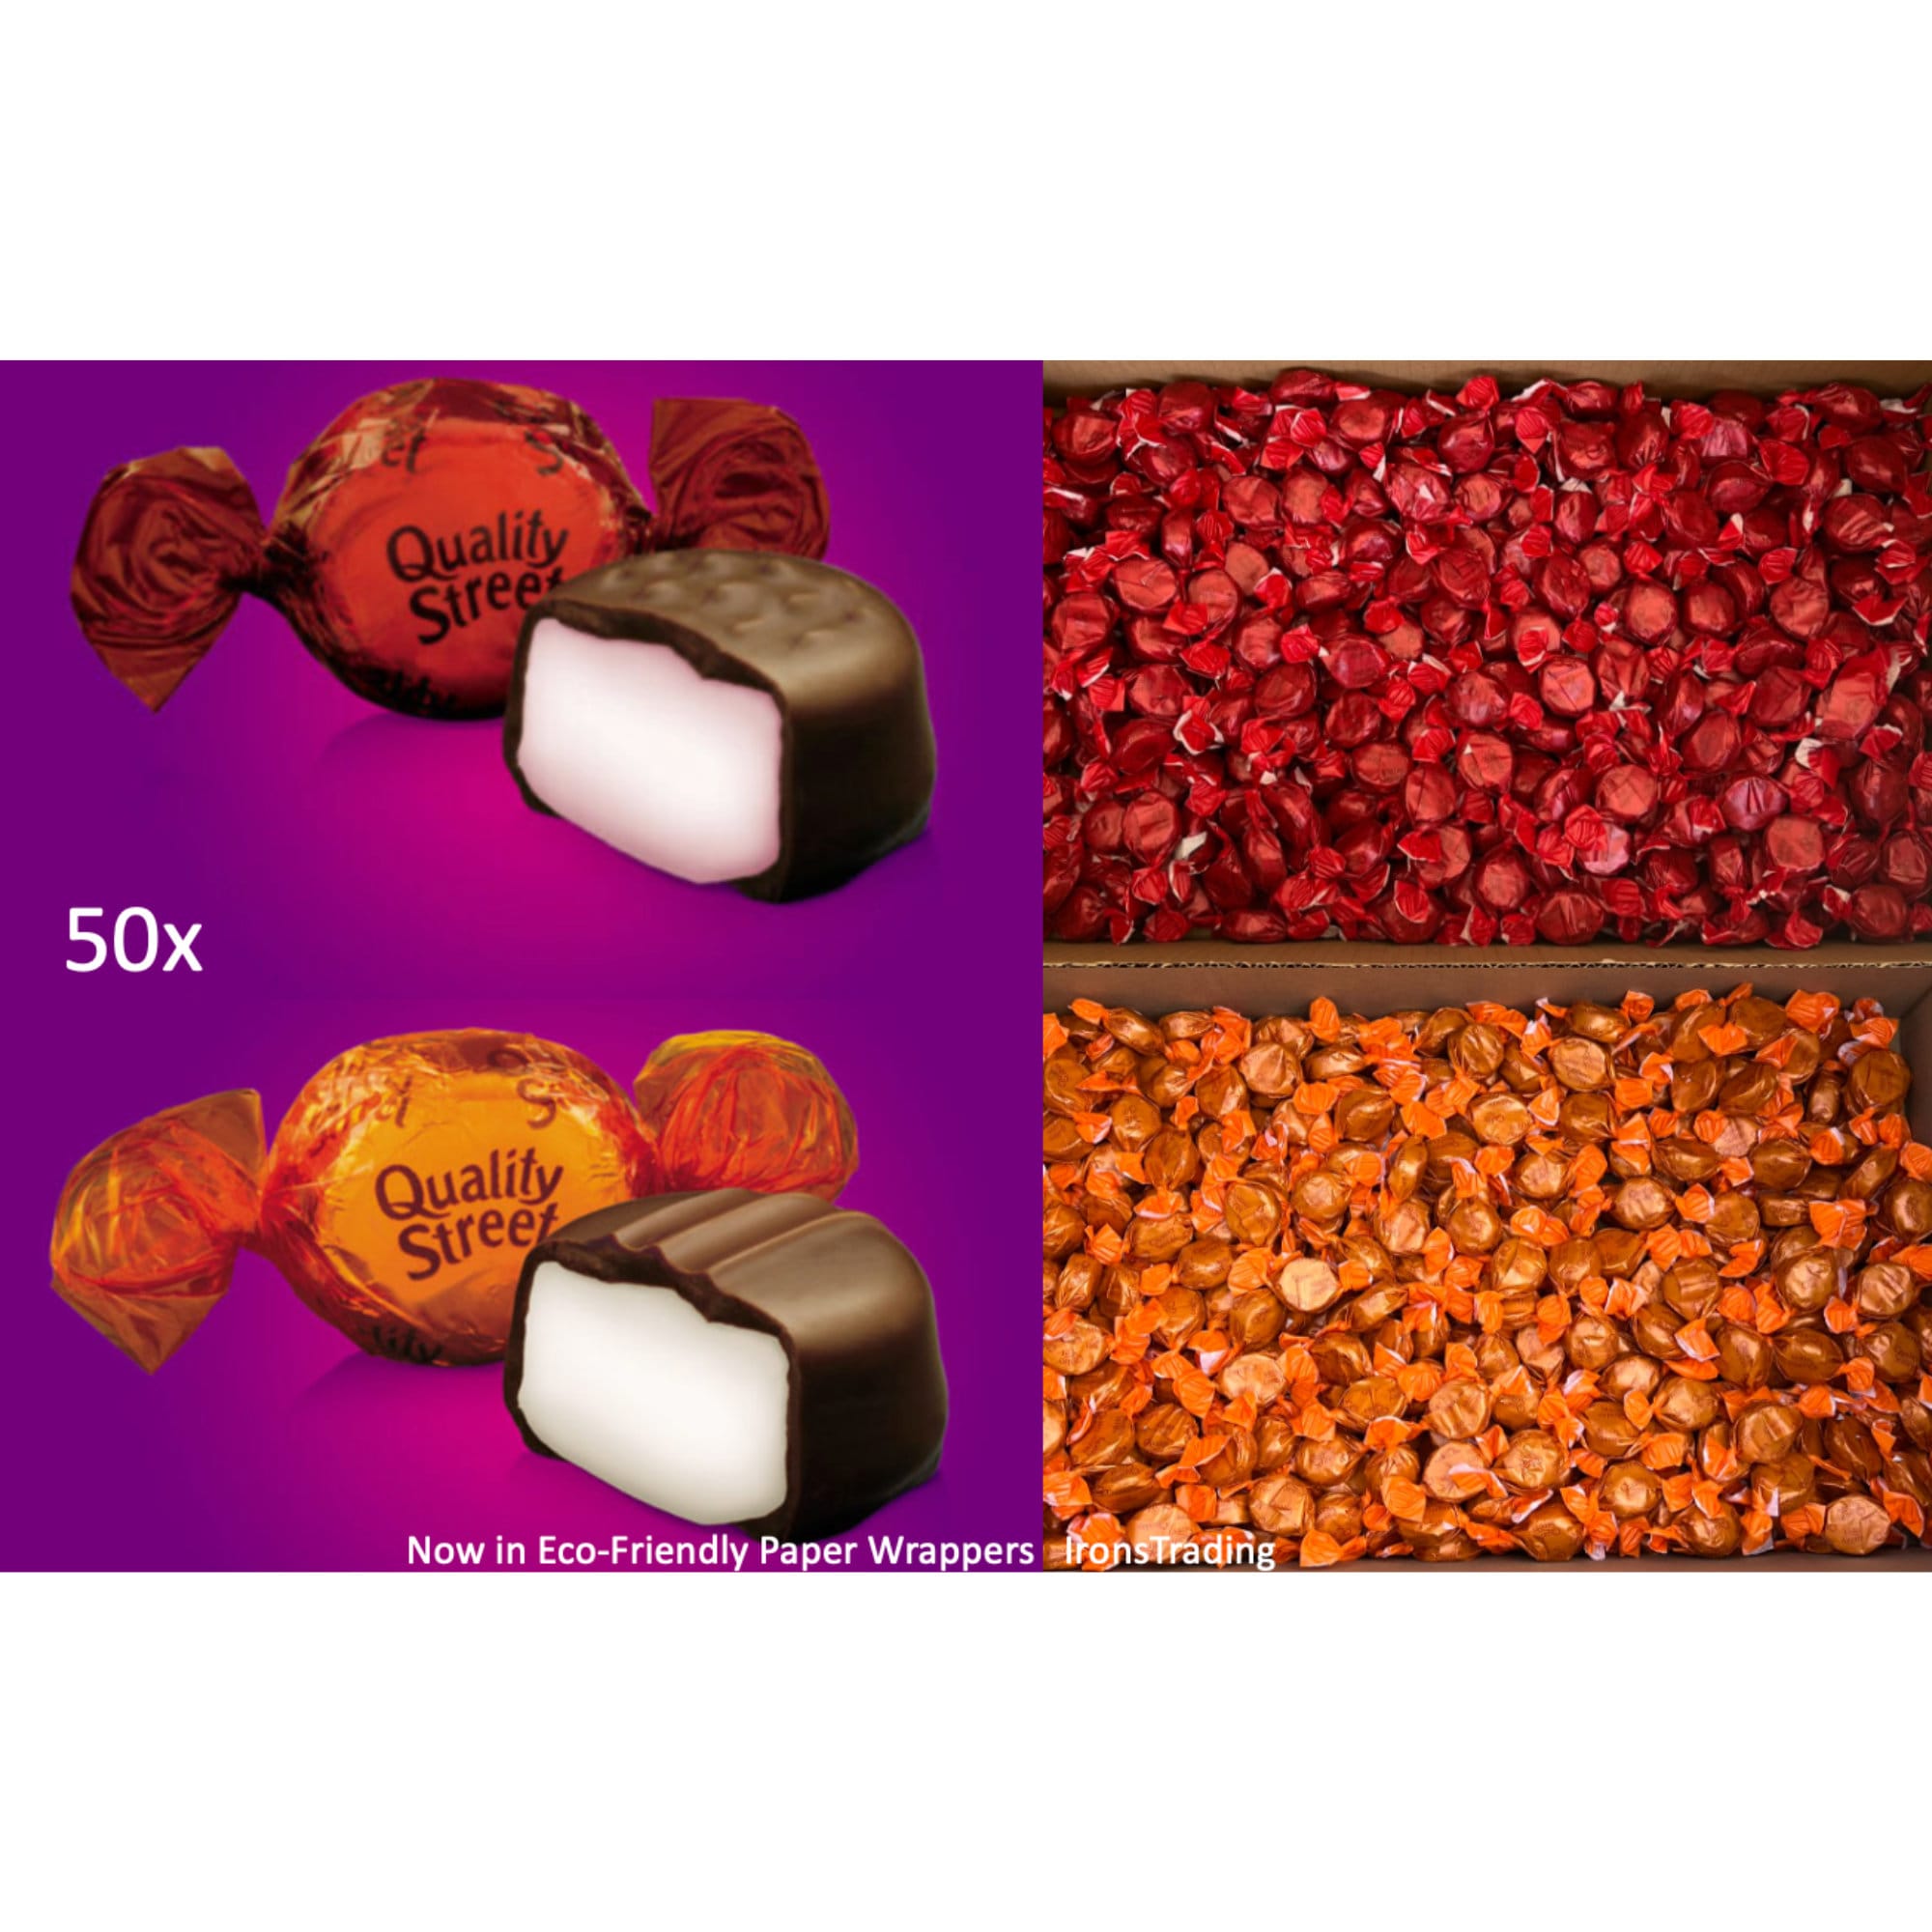 Kinder Bueno, 30 Two Count Packs, Crème au Chocolat Rwanda